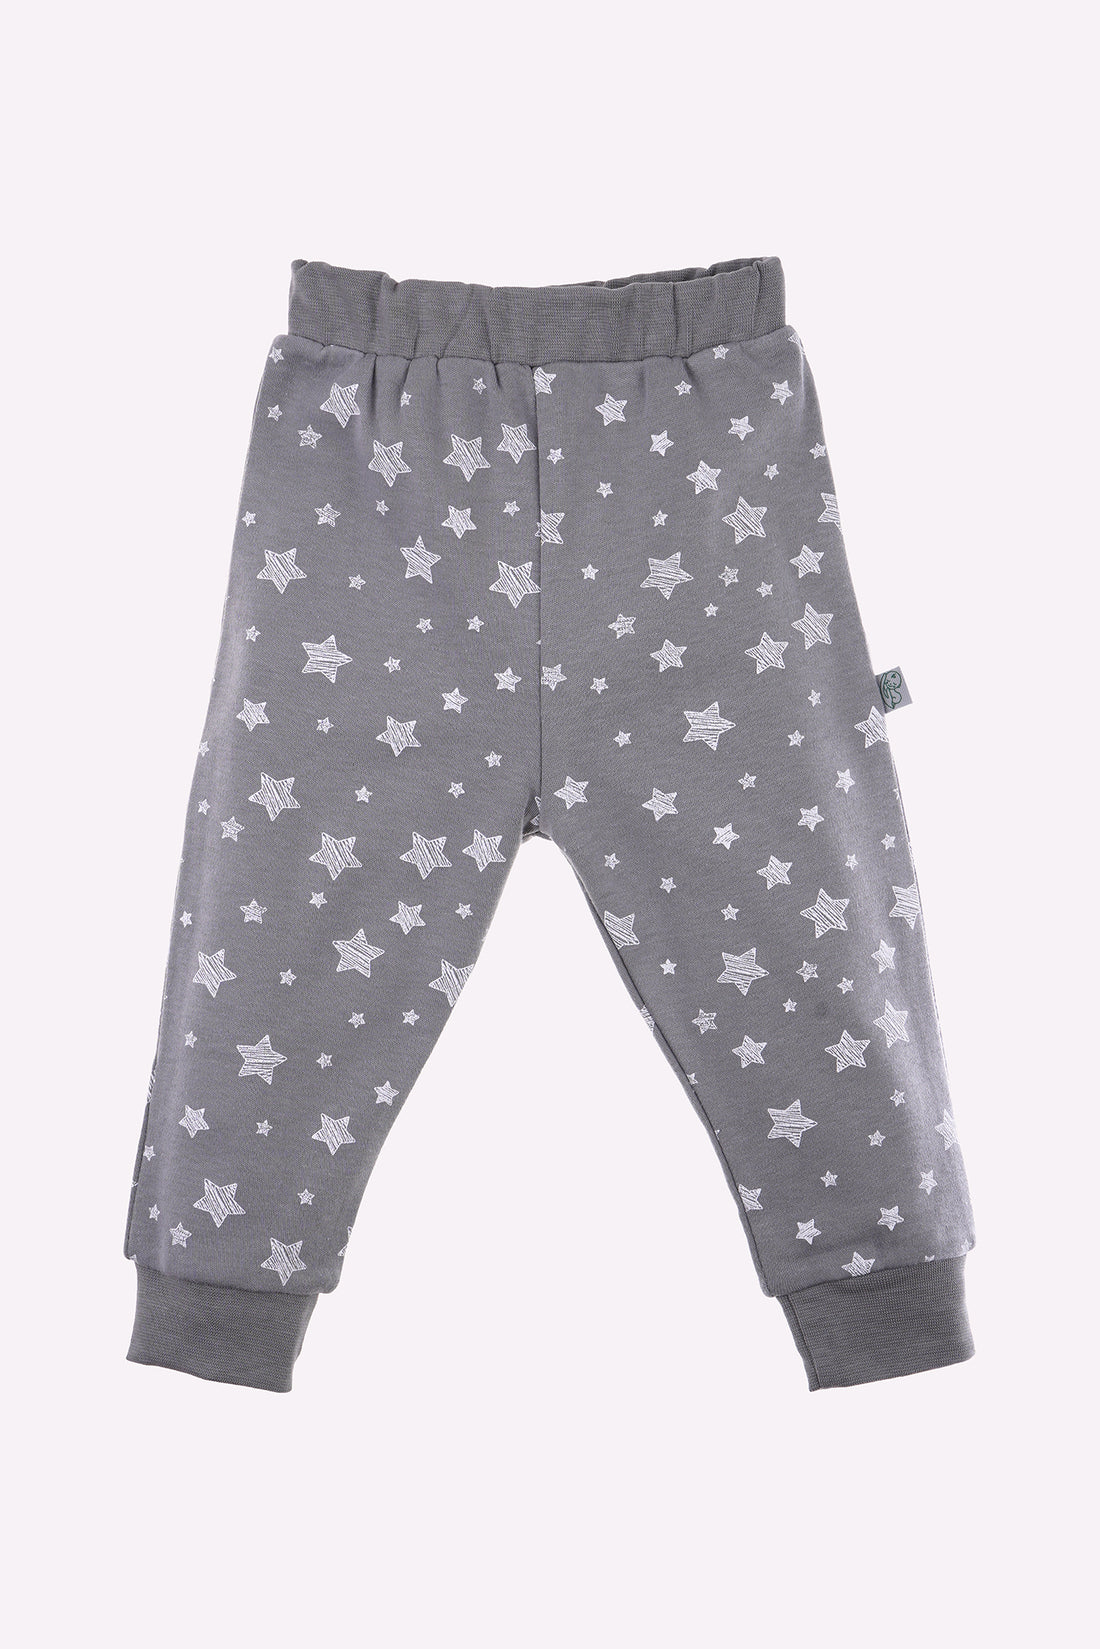 Babycosy Organic Printed Pants Set of 2 (Creamy White & Gray)